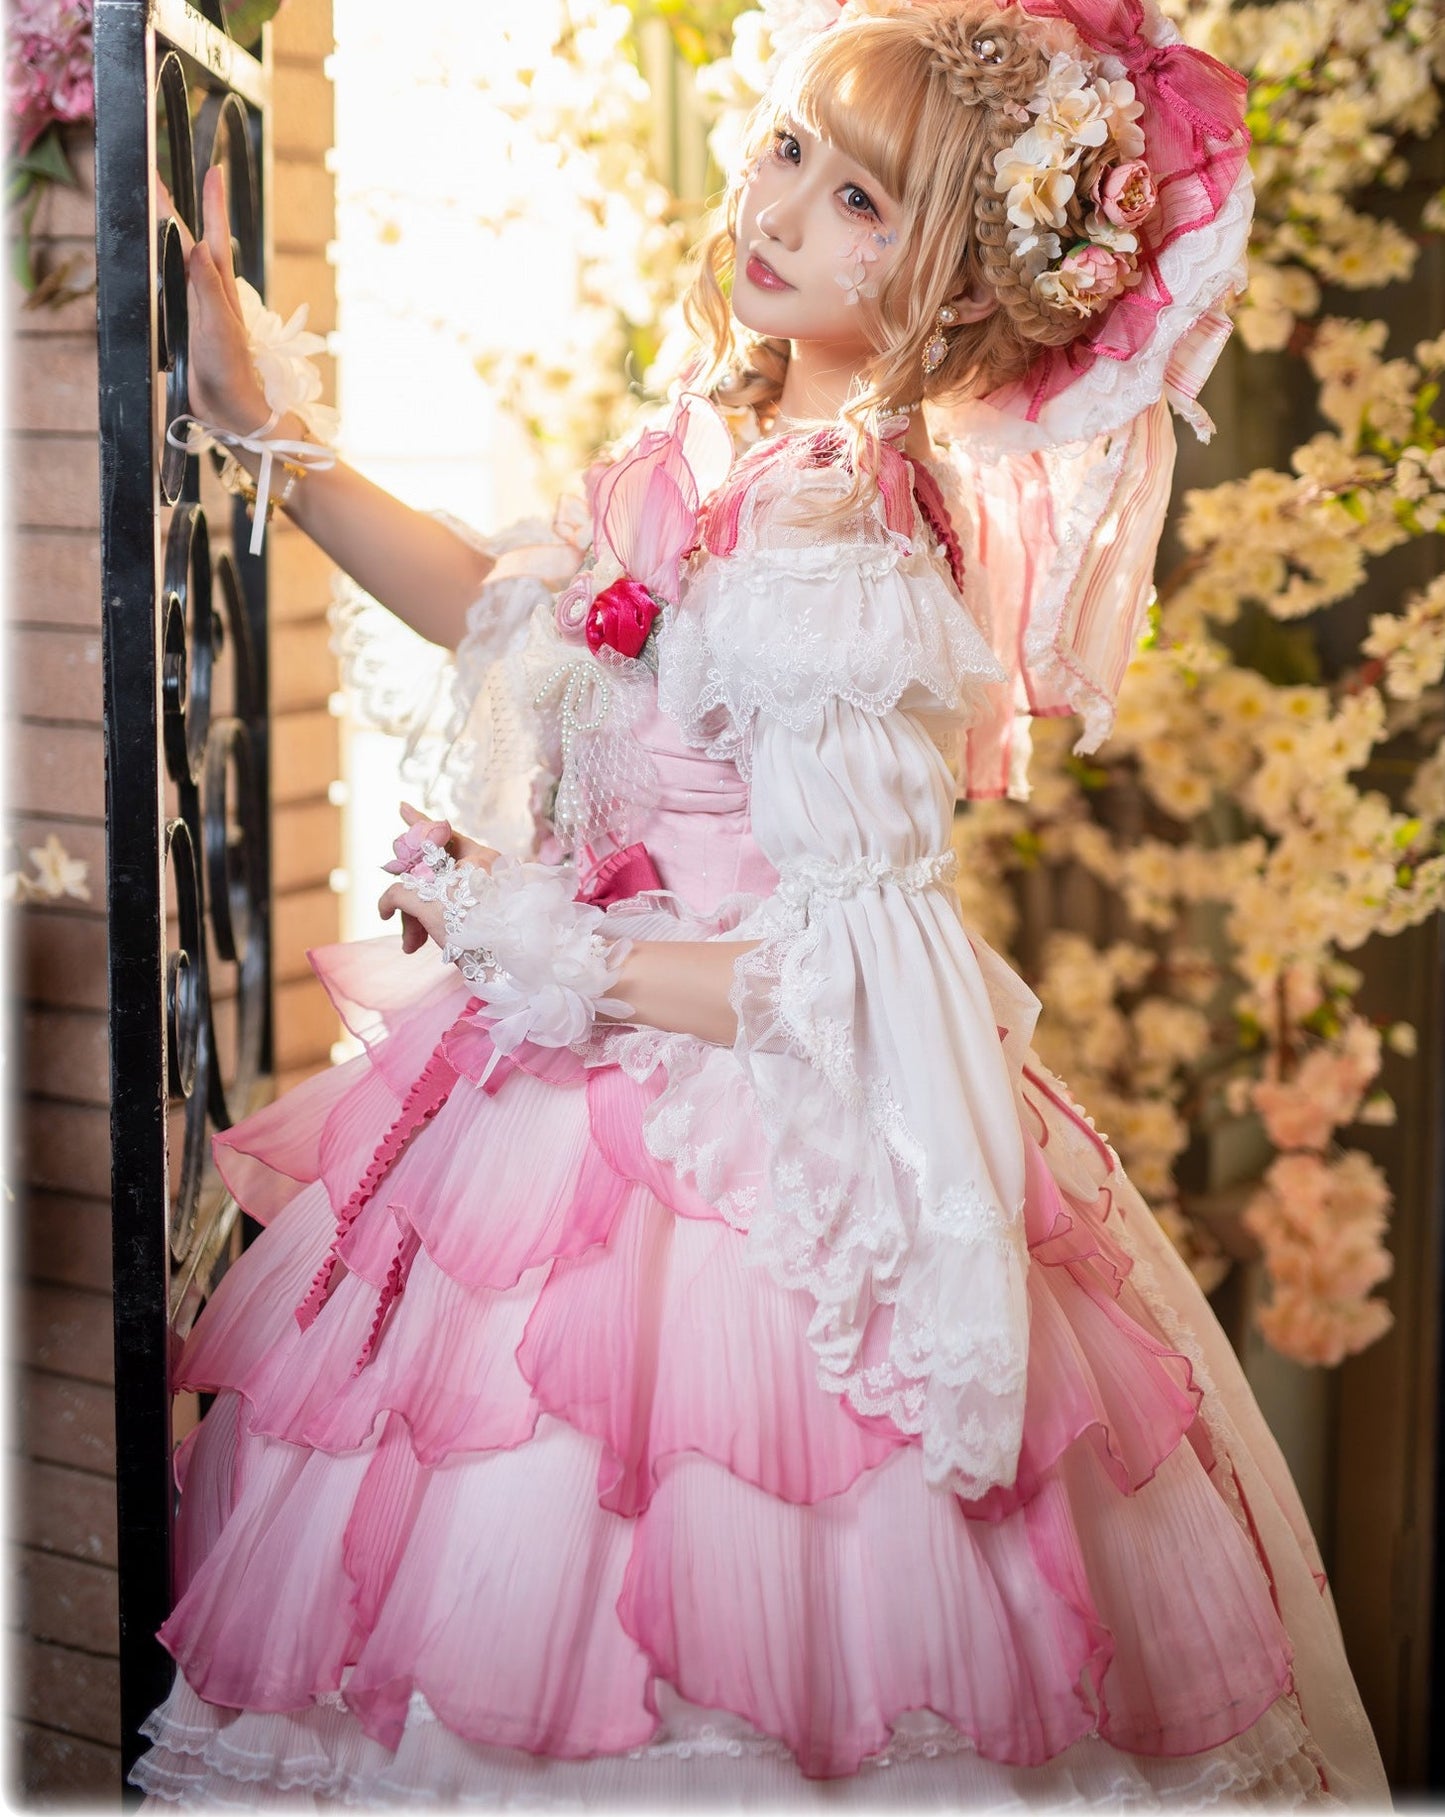 Petals swaying, double-flowered rose princess dress